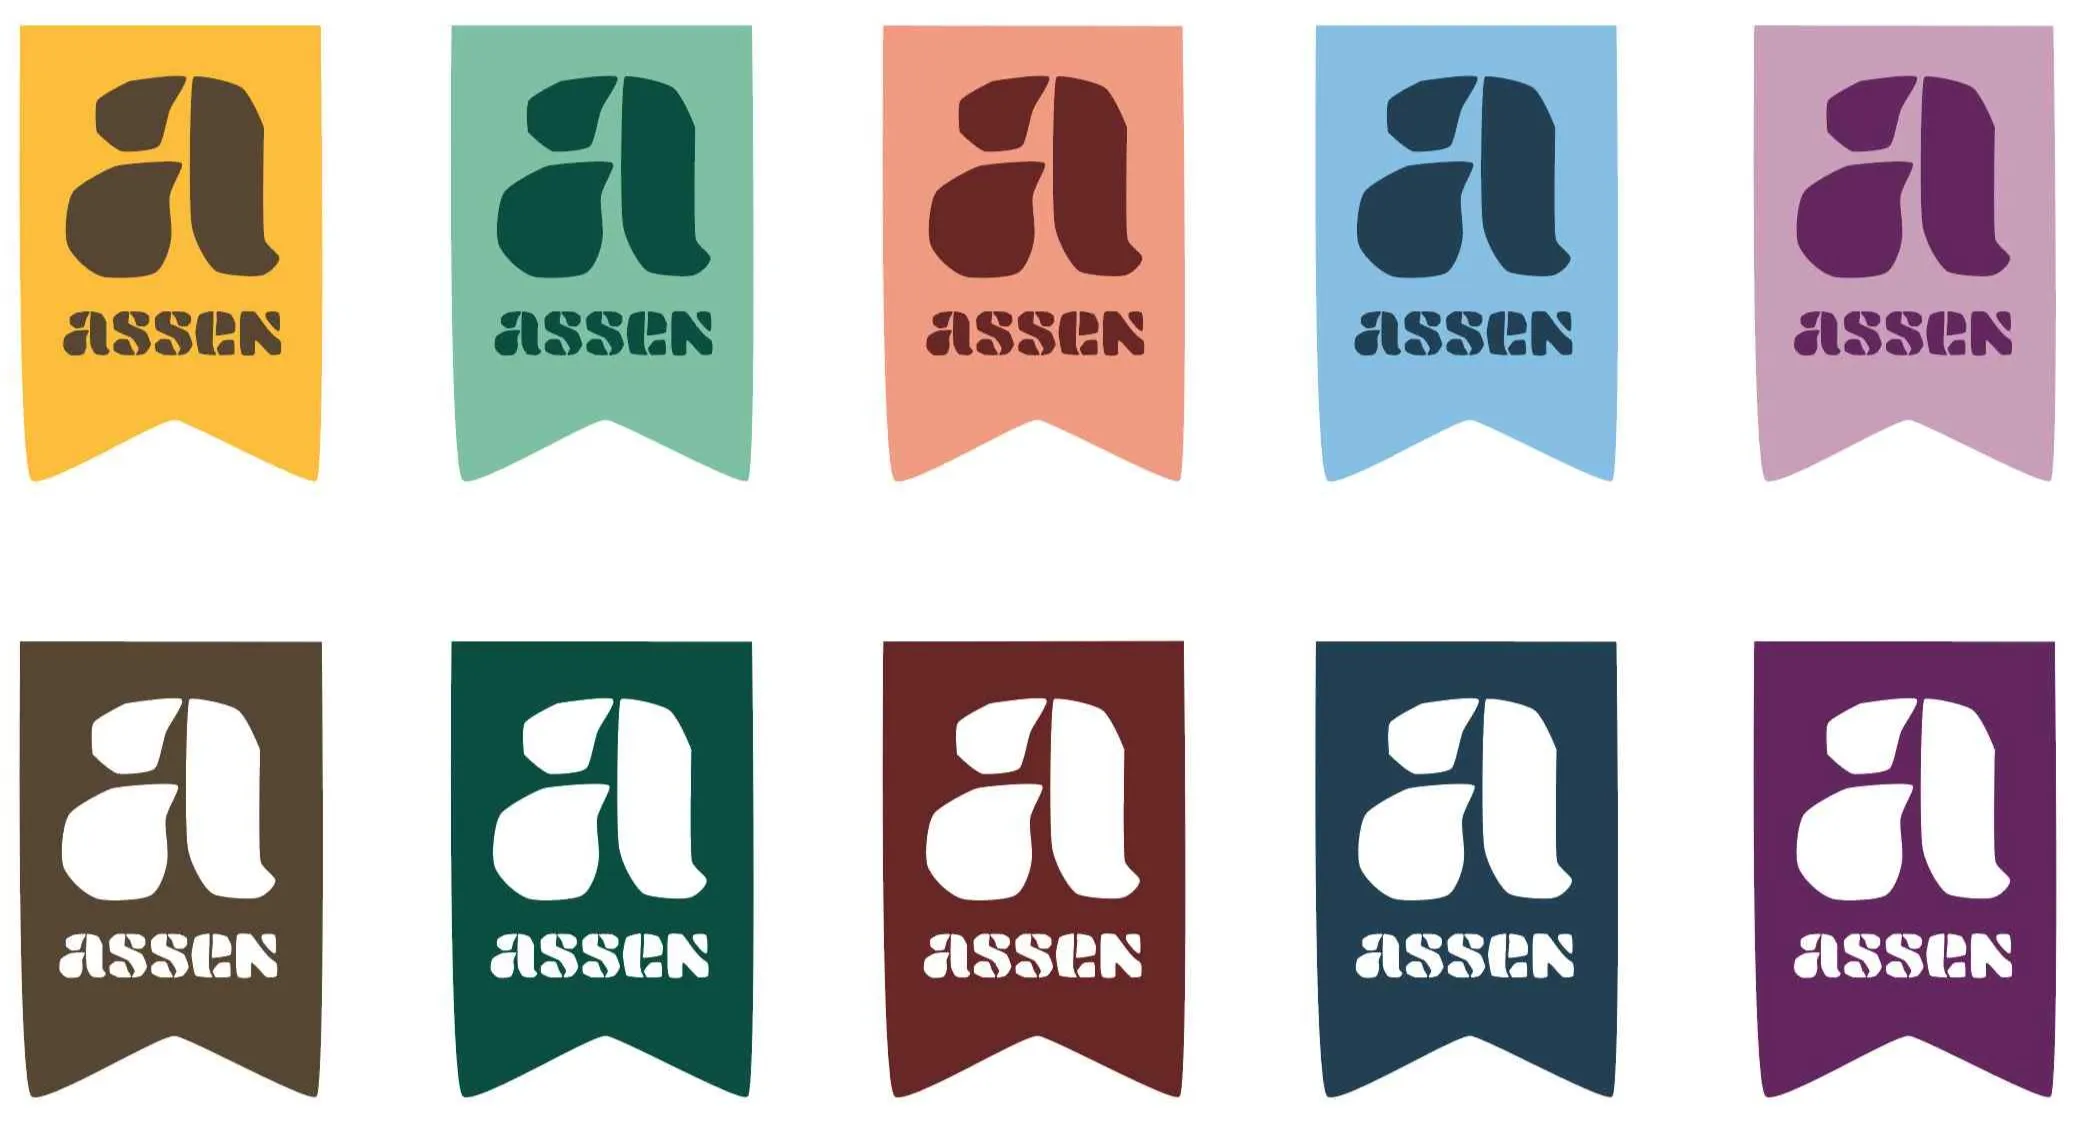 Logovariaties stadsmarketing Assen